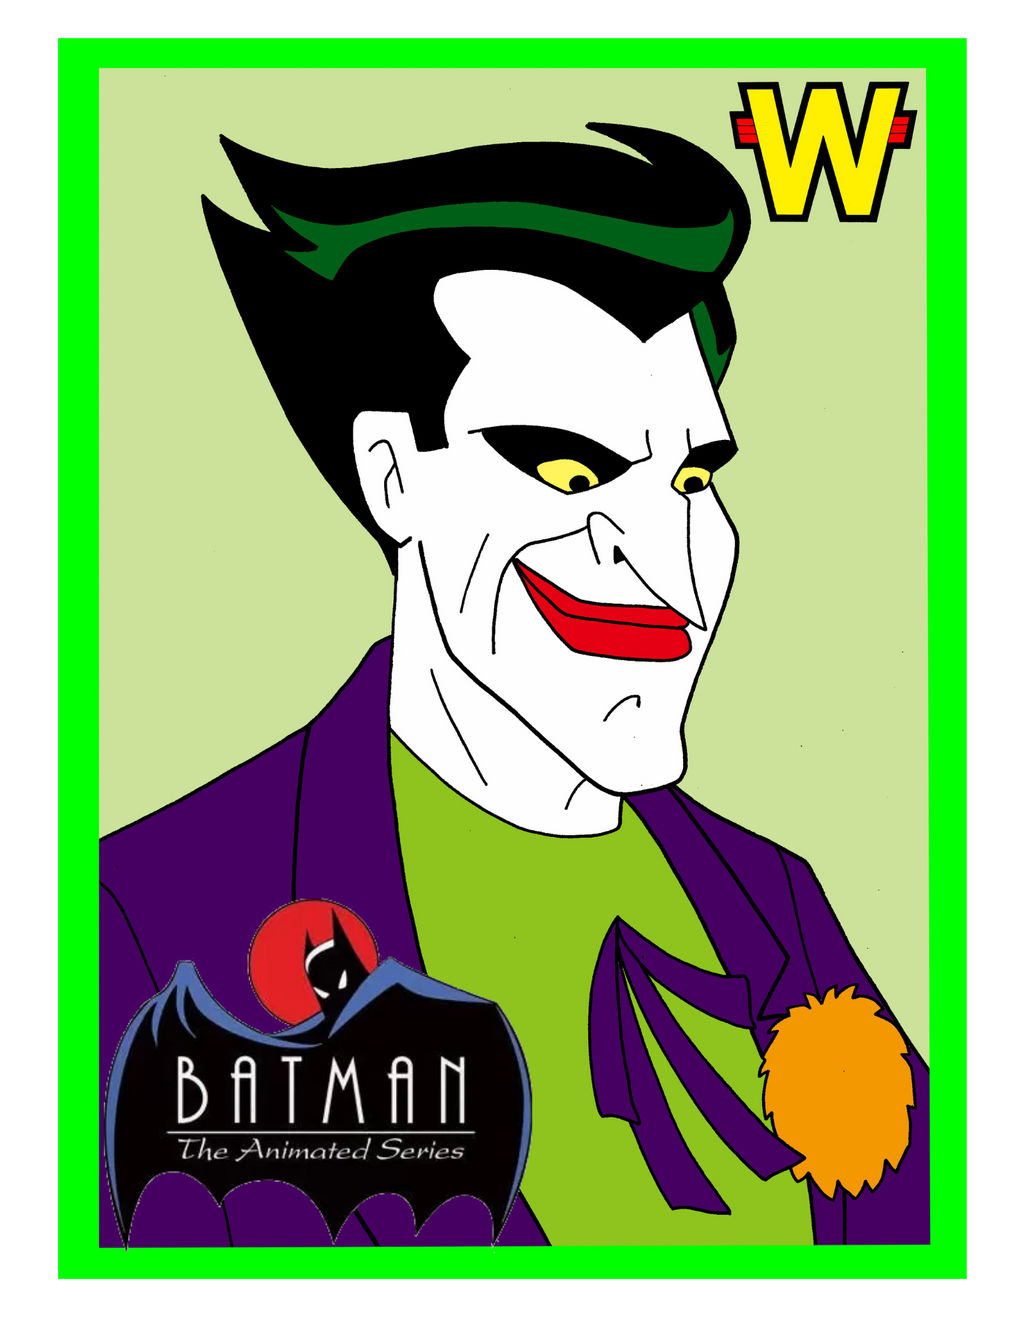 1992 Joker from Batman Animated Series by donandron on DeviantArt